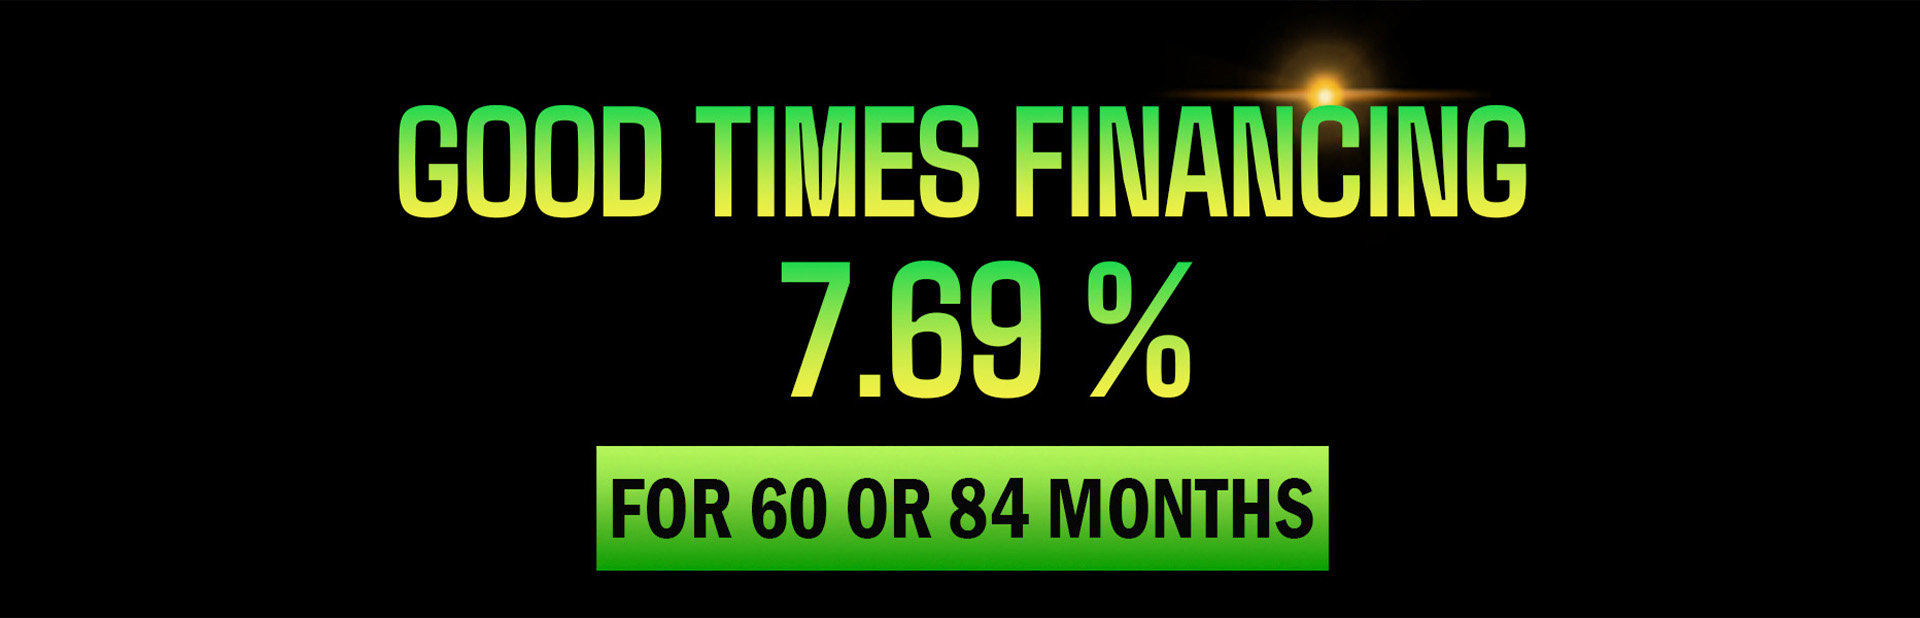 Good Times Financing Options - 7.69%